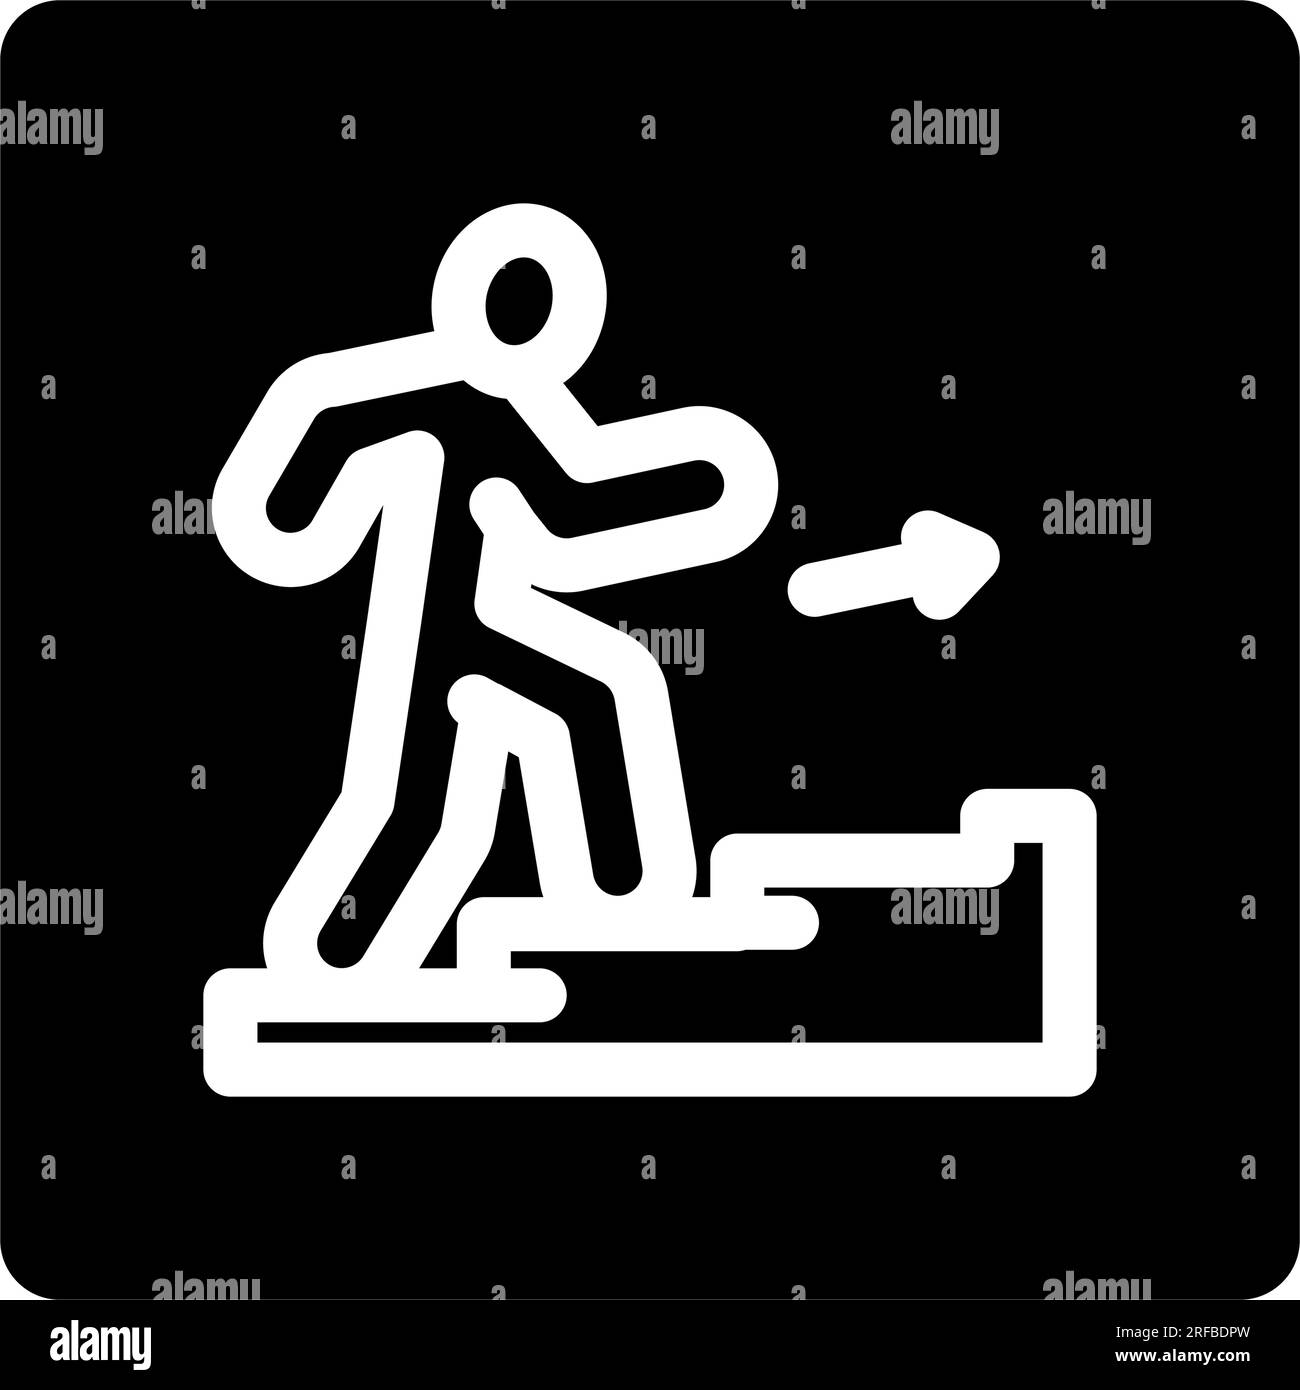 stairway up evacuation emergency glyph icon vector illustration Stock Vector